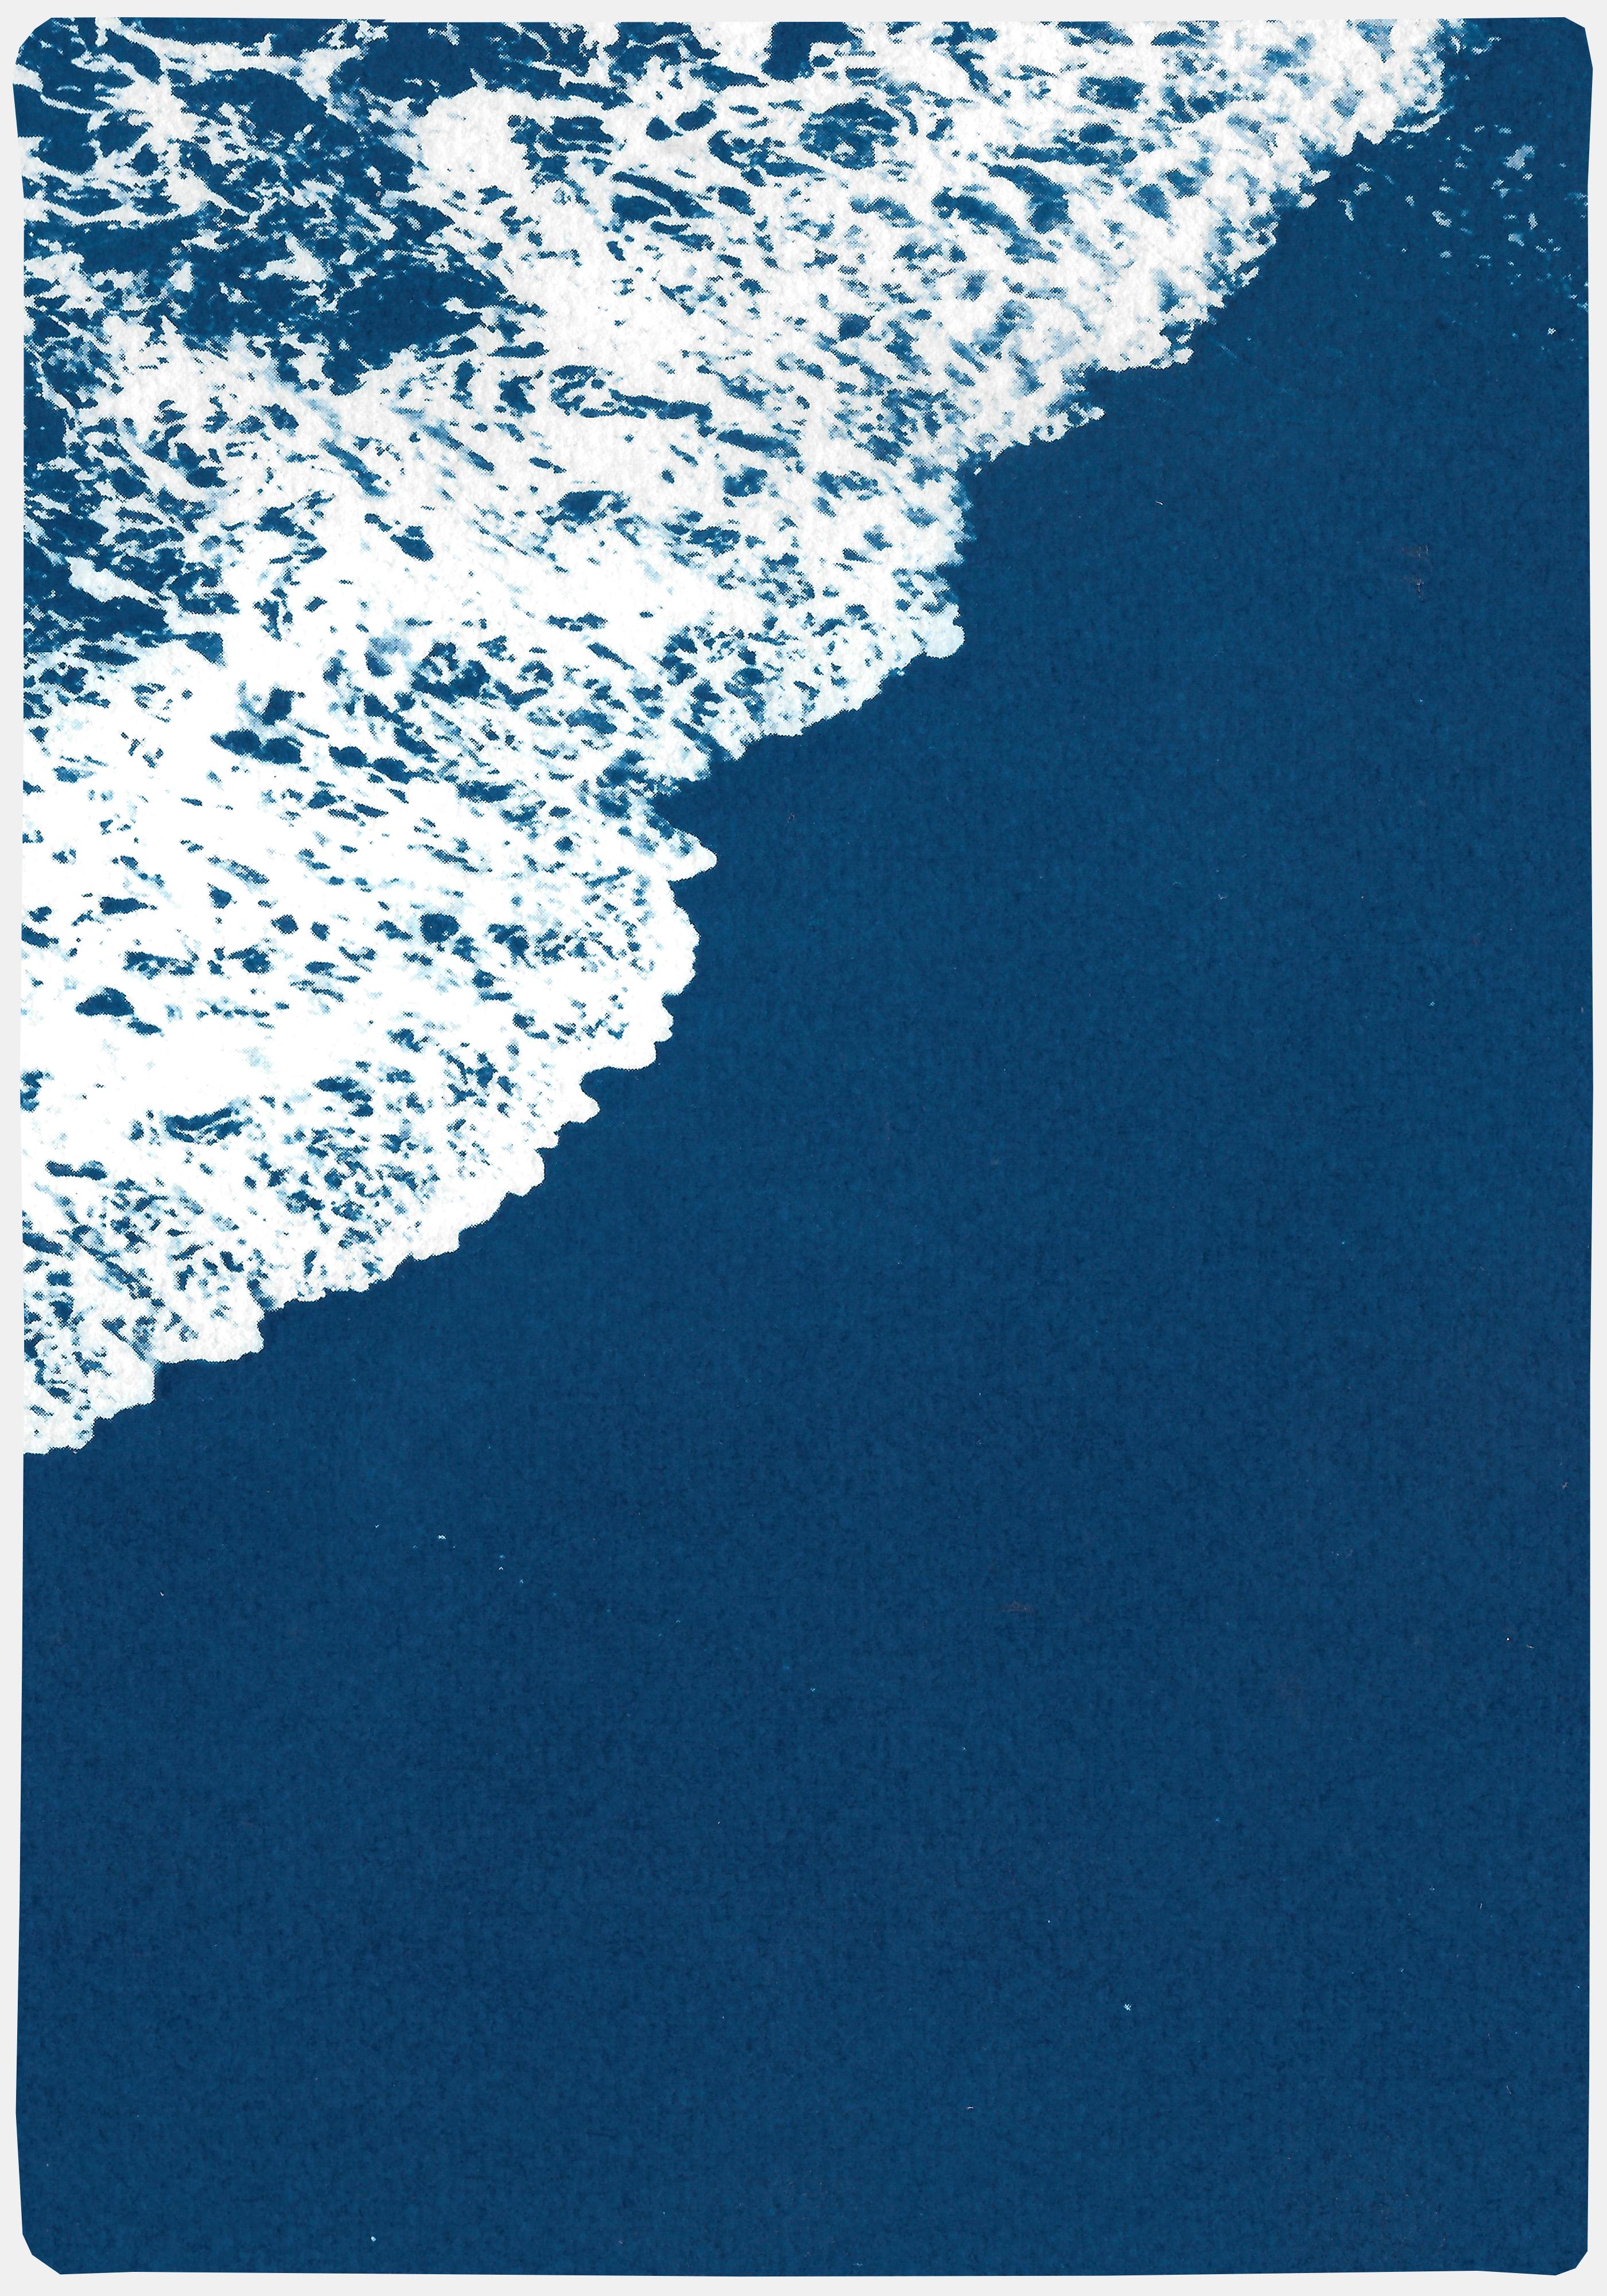 Diptyque nautique de sable bleu profond, cyanotype original, paysage marin envoûtant - Bleu Landscape Art par Kind of Cyan